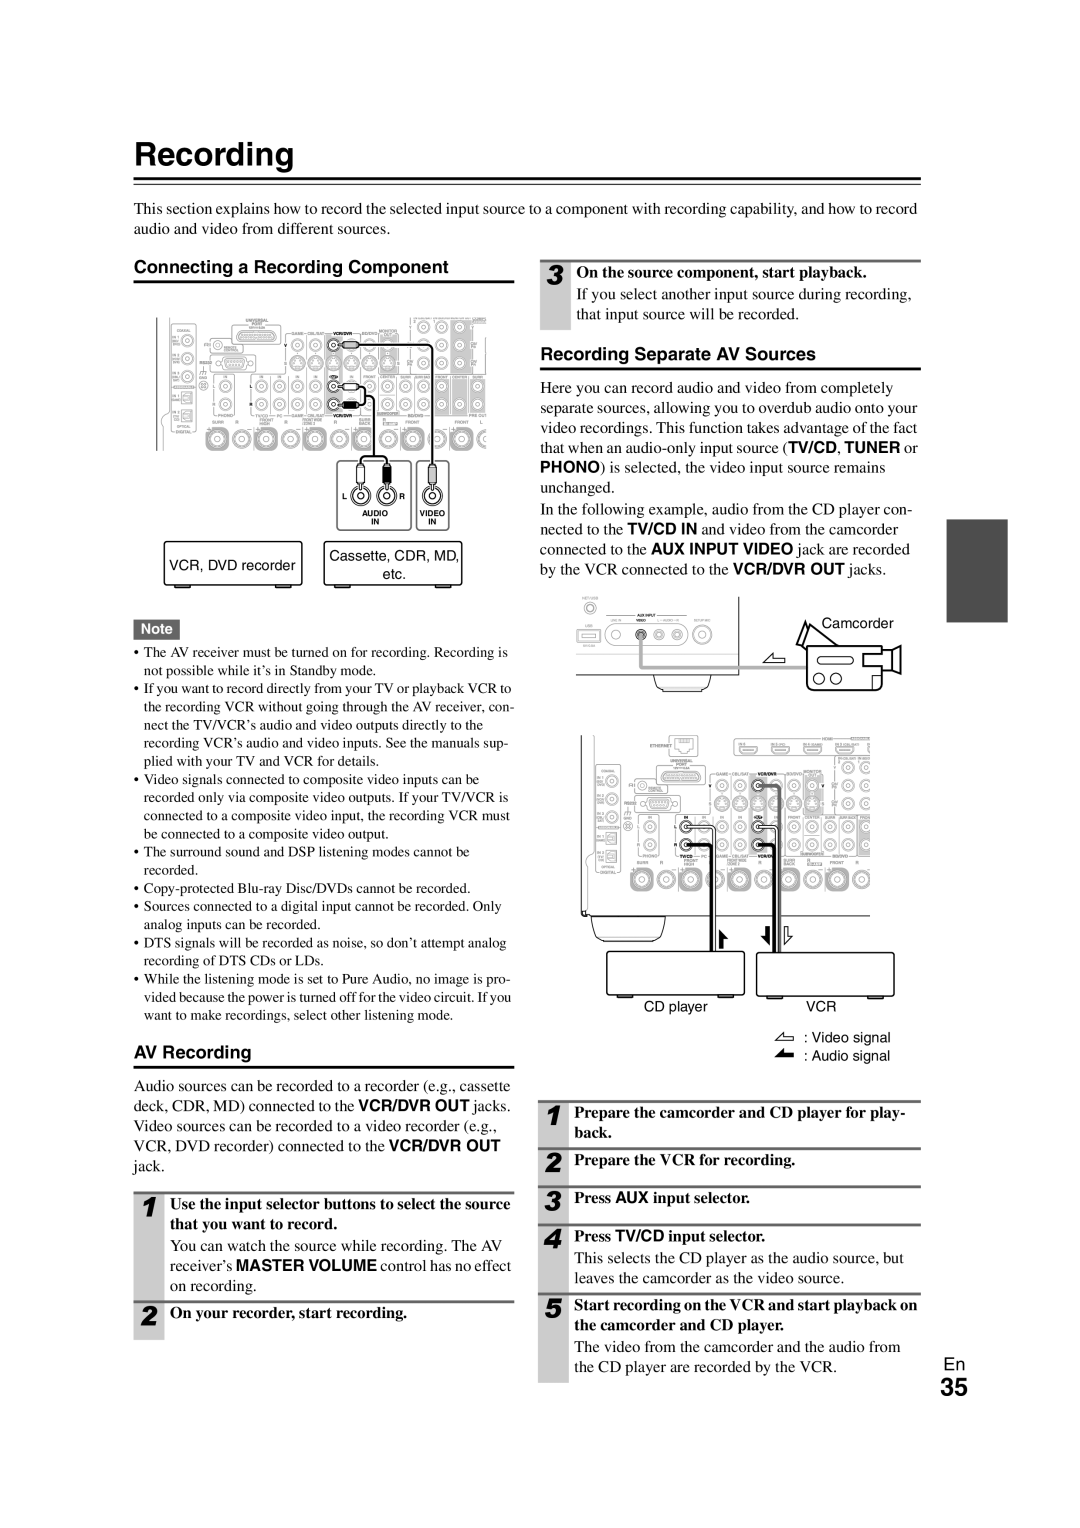 Onkyo TX-NR708 instruction manual Connecting a Recording Component, AV Recording 